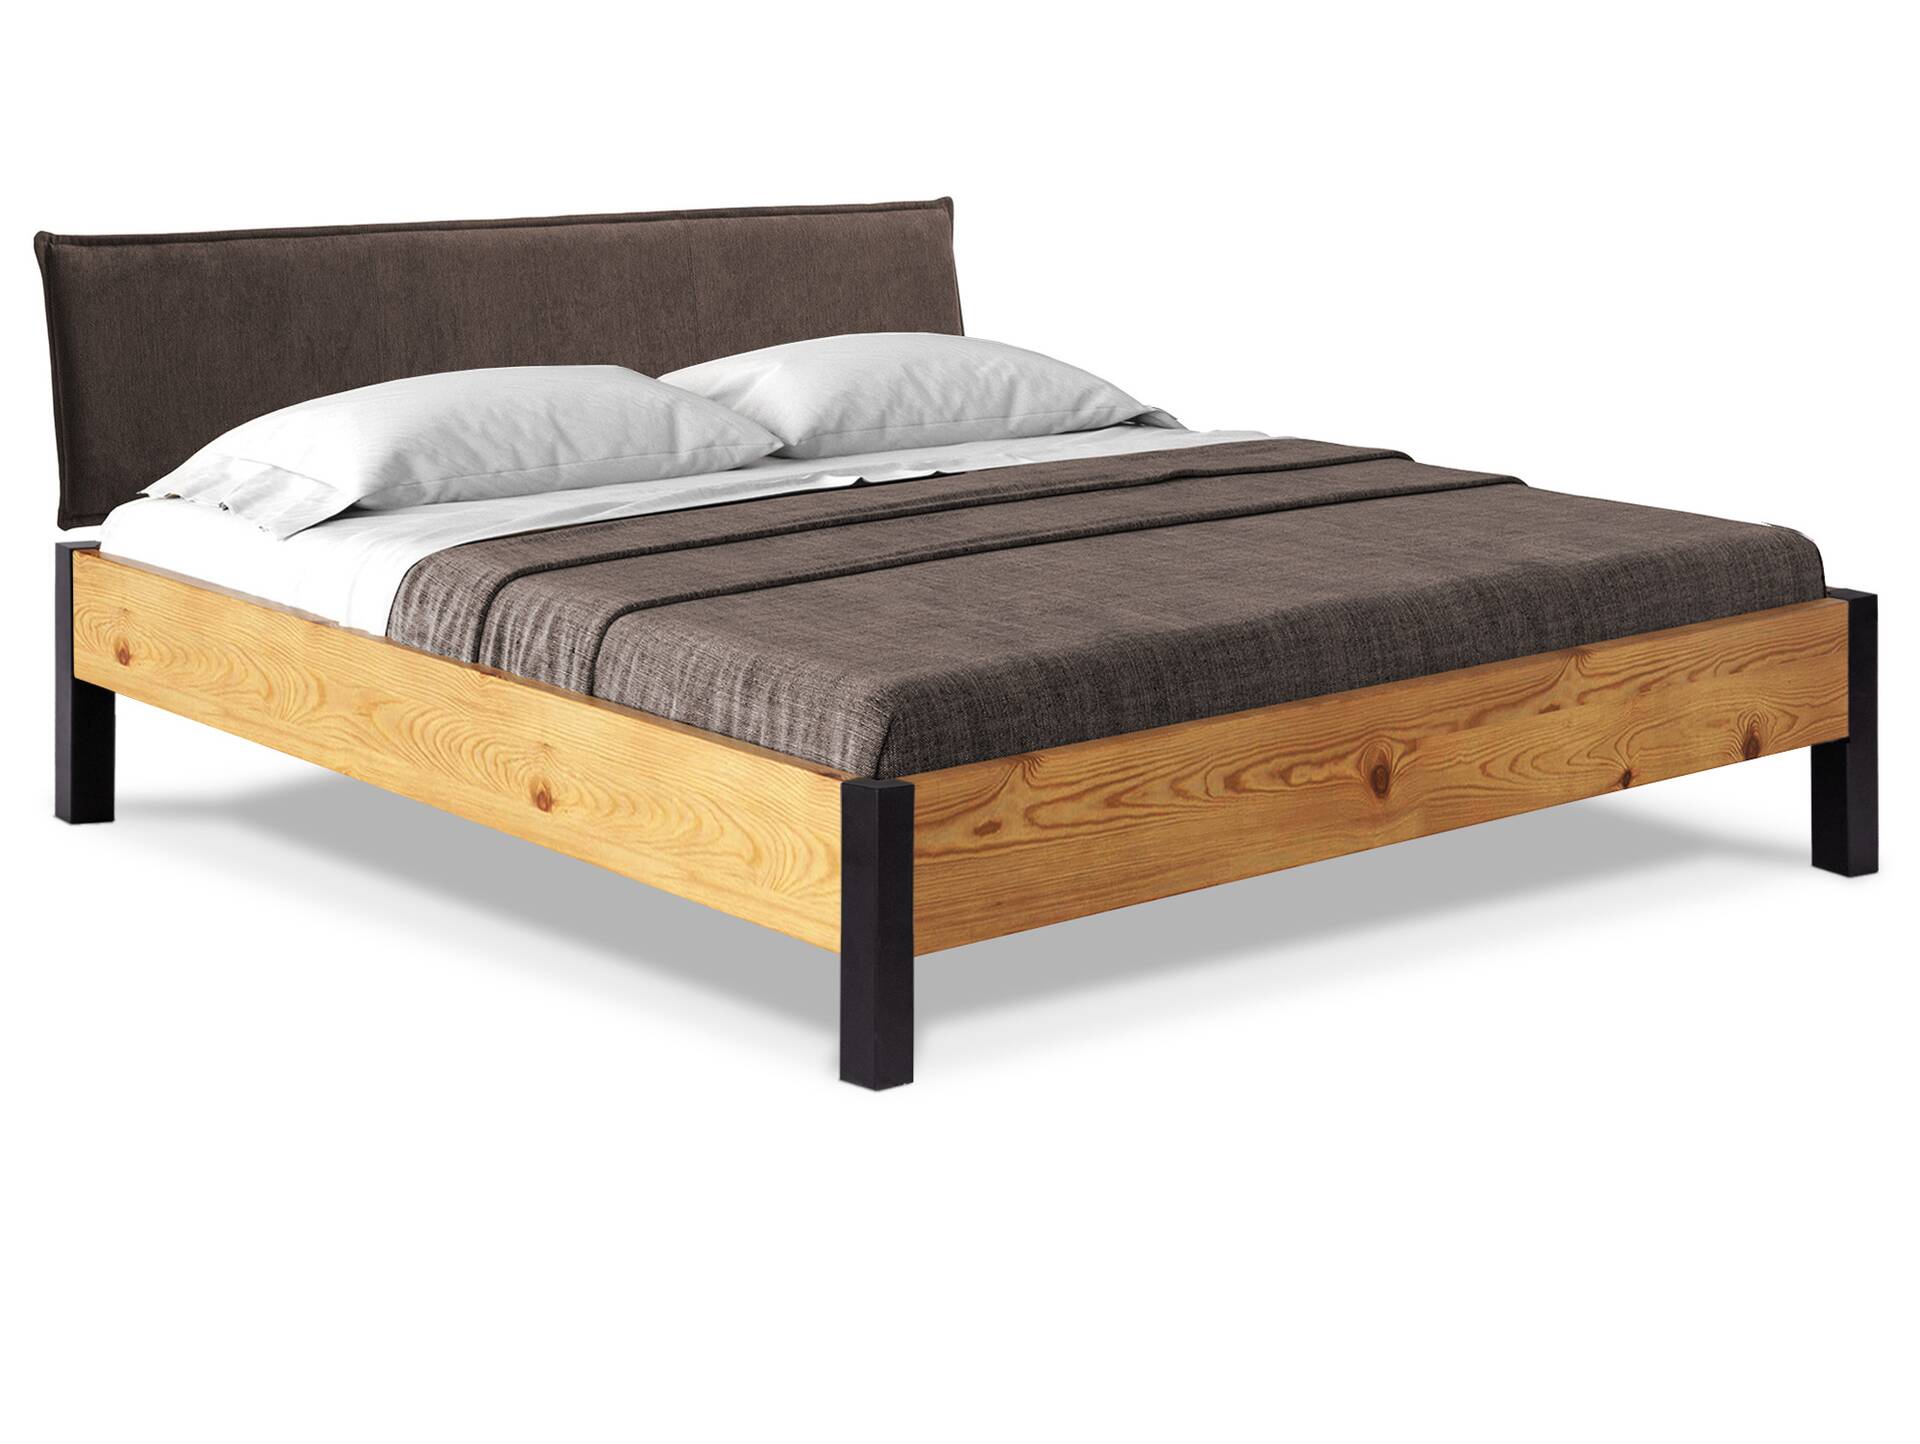 CURBY Bett Metallfuß, mit Polsterkopfteil, Material Massivholz, rustikale Altholzoptik, Fichte 90 x 200 cm | natur | Stoff Braun ohne Steppung